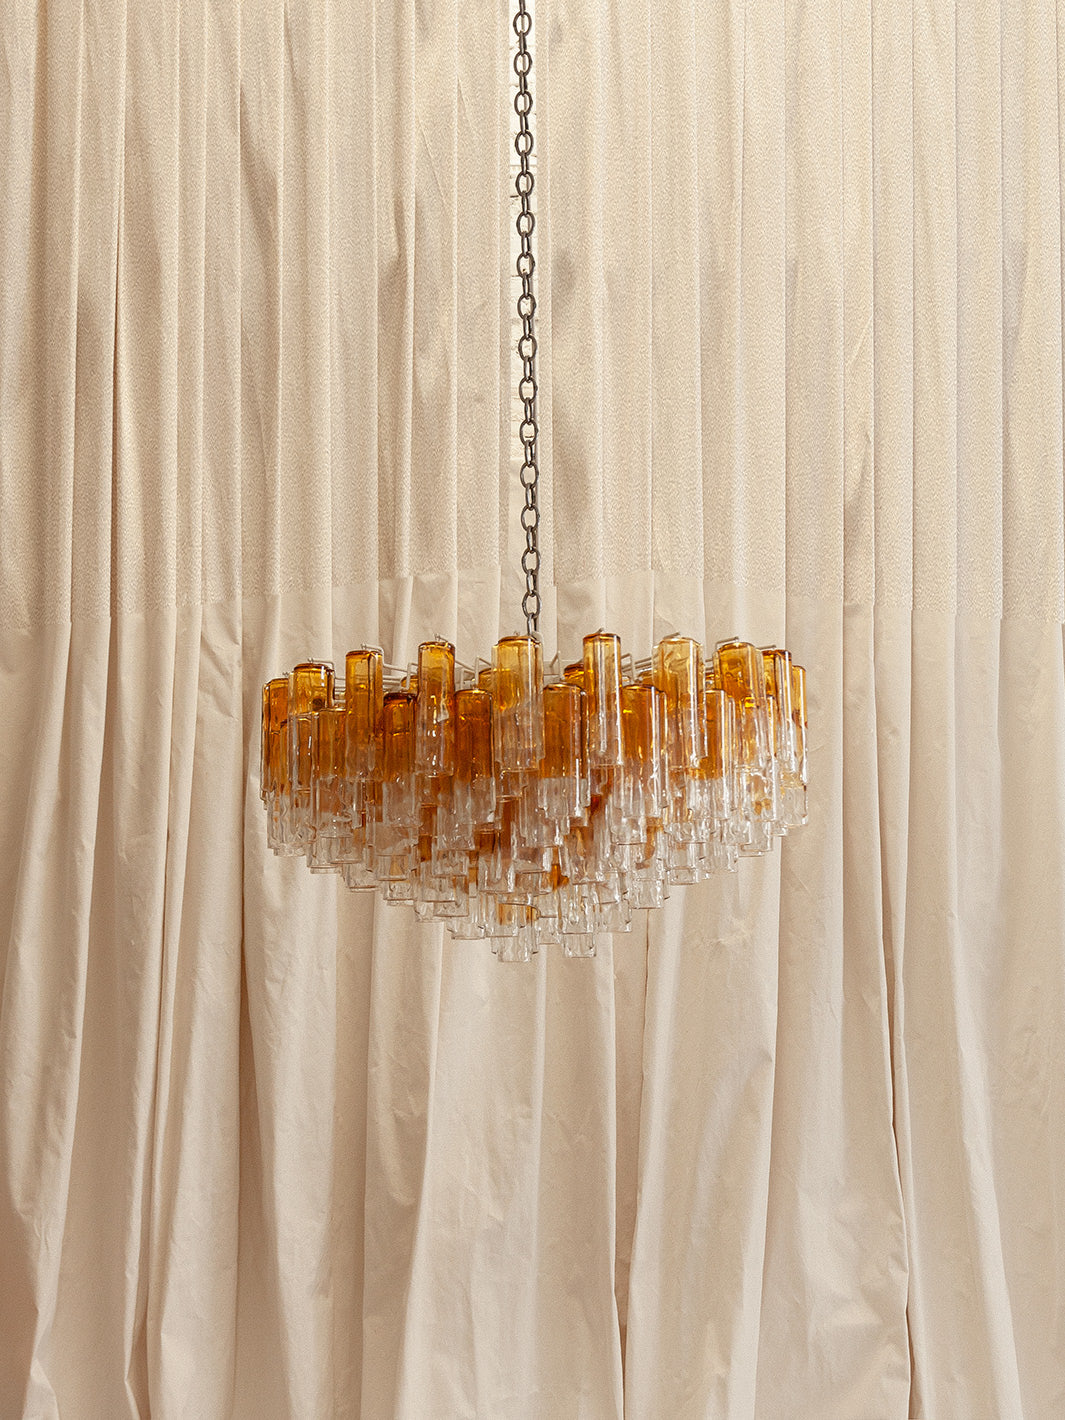 Calze Lamp by Venini 50s